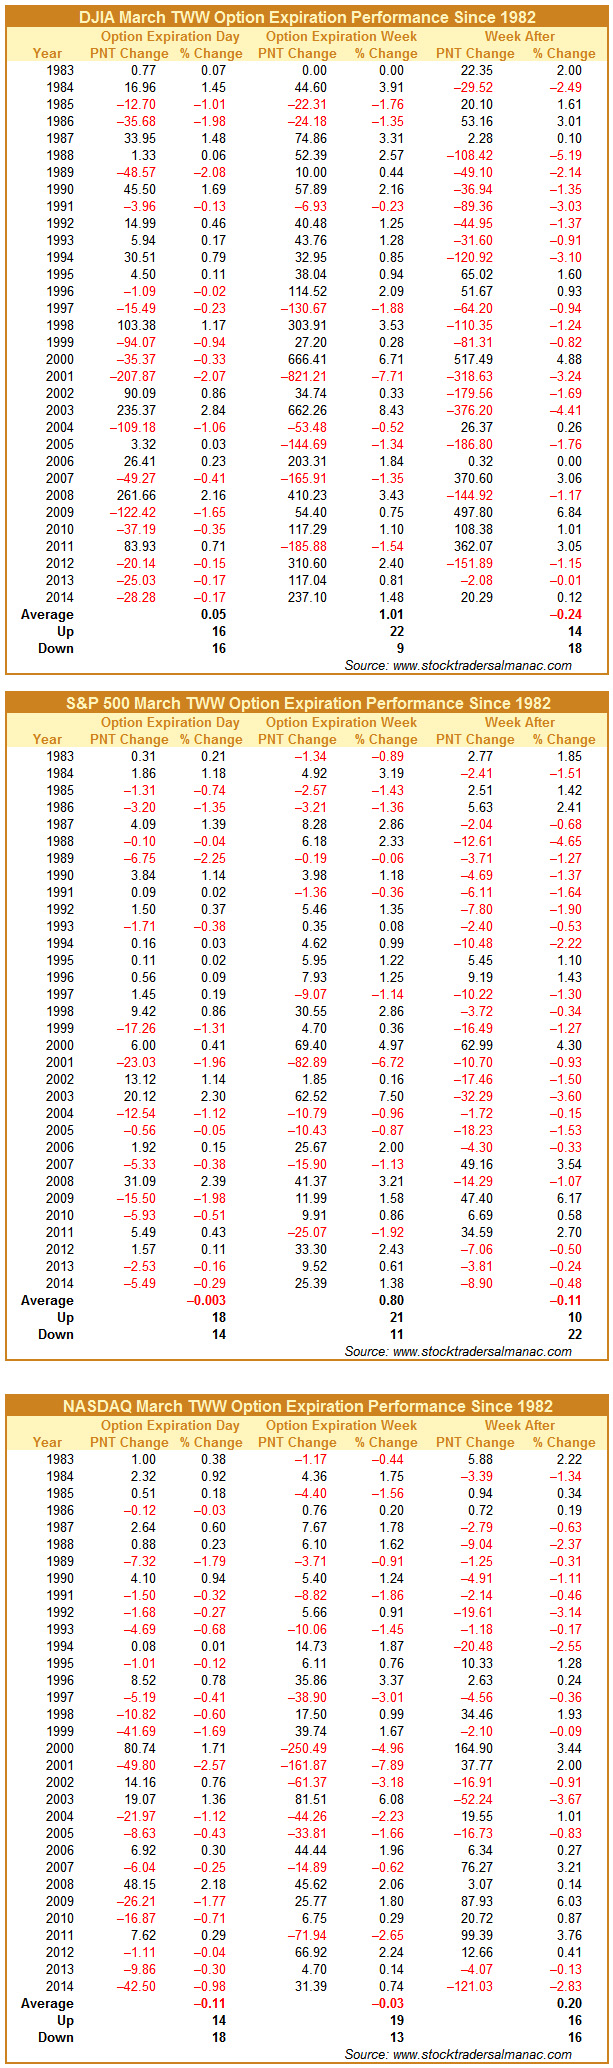 [DJIA, S&P 500 & NASDAQ March Option Expiration Performance since 1983]